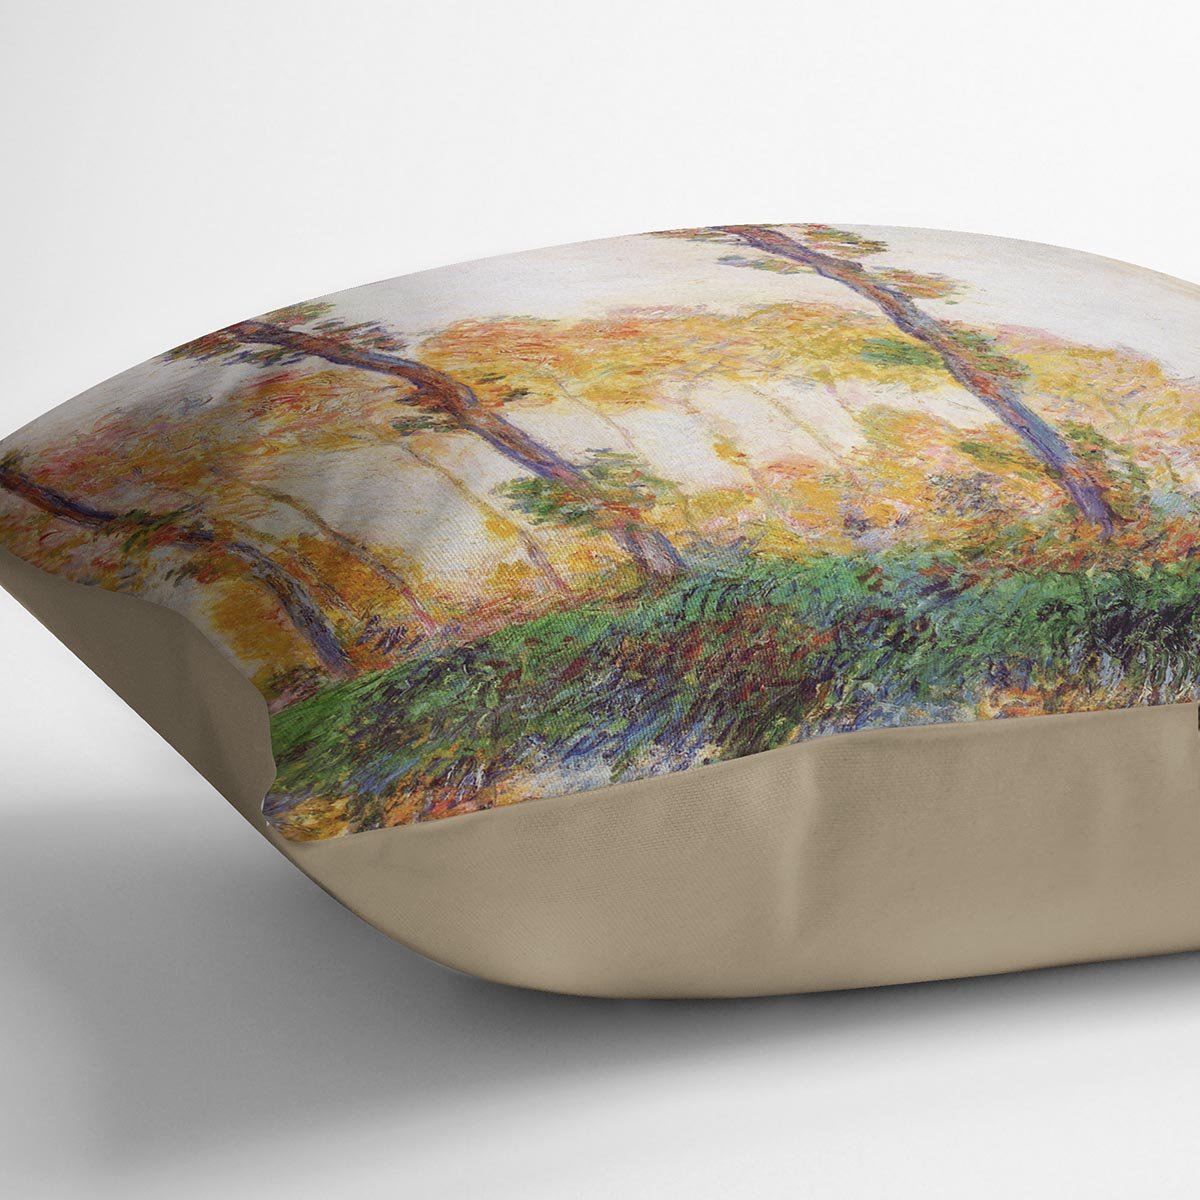 Poplars in Autumn 2 by Monet Throw Pillow